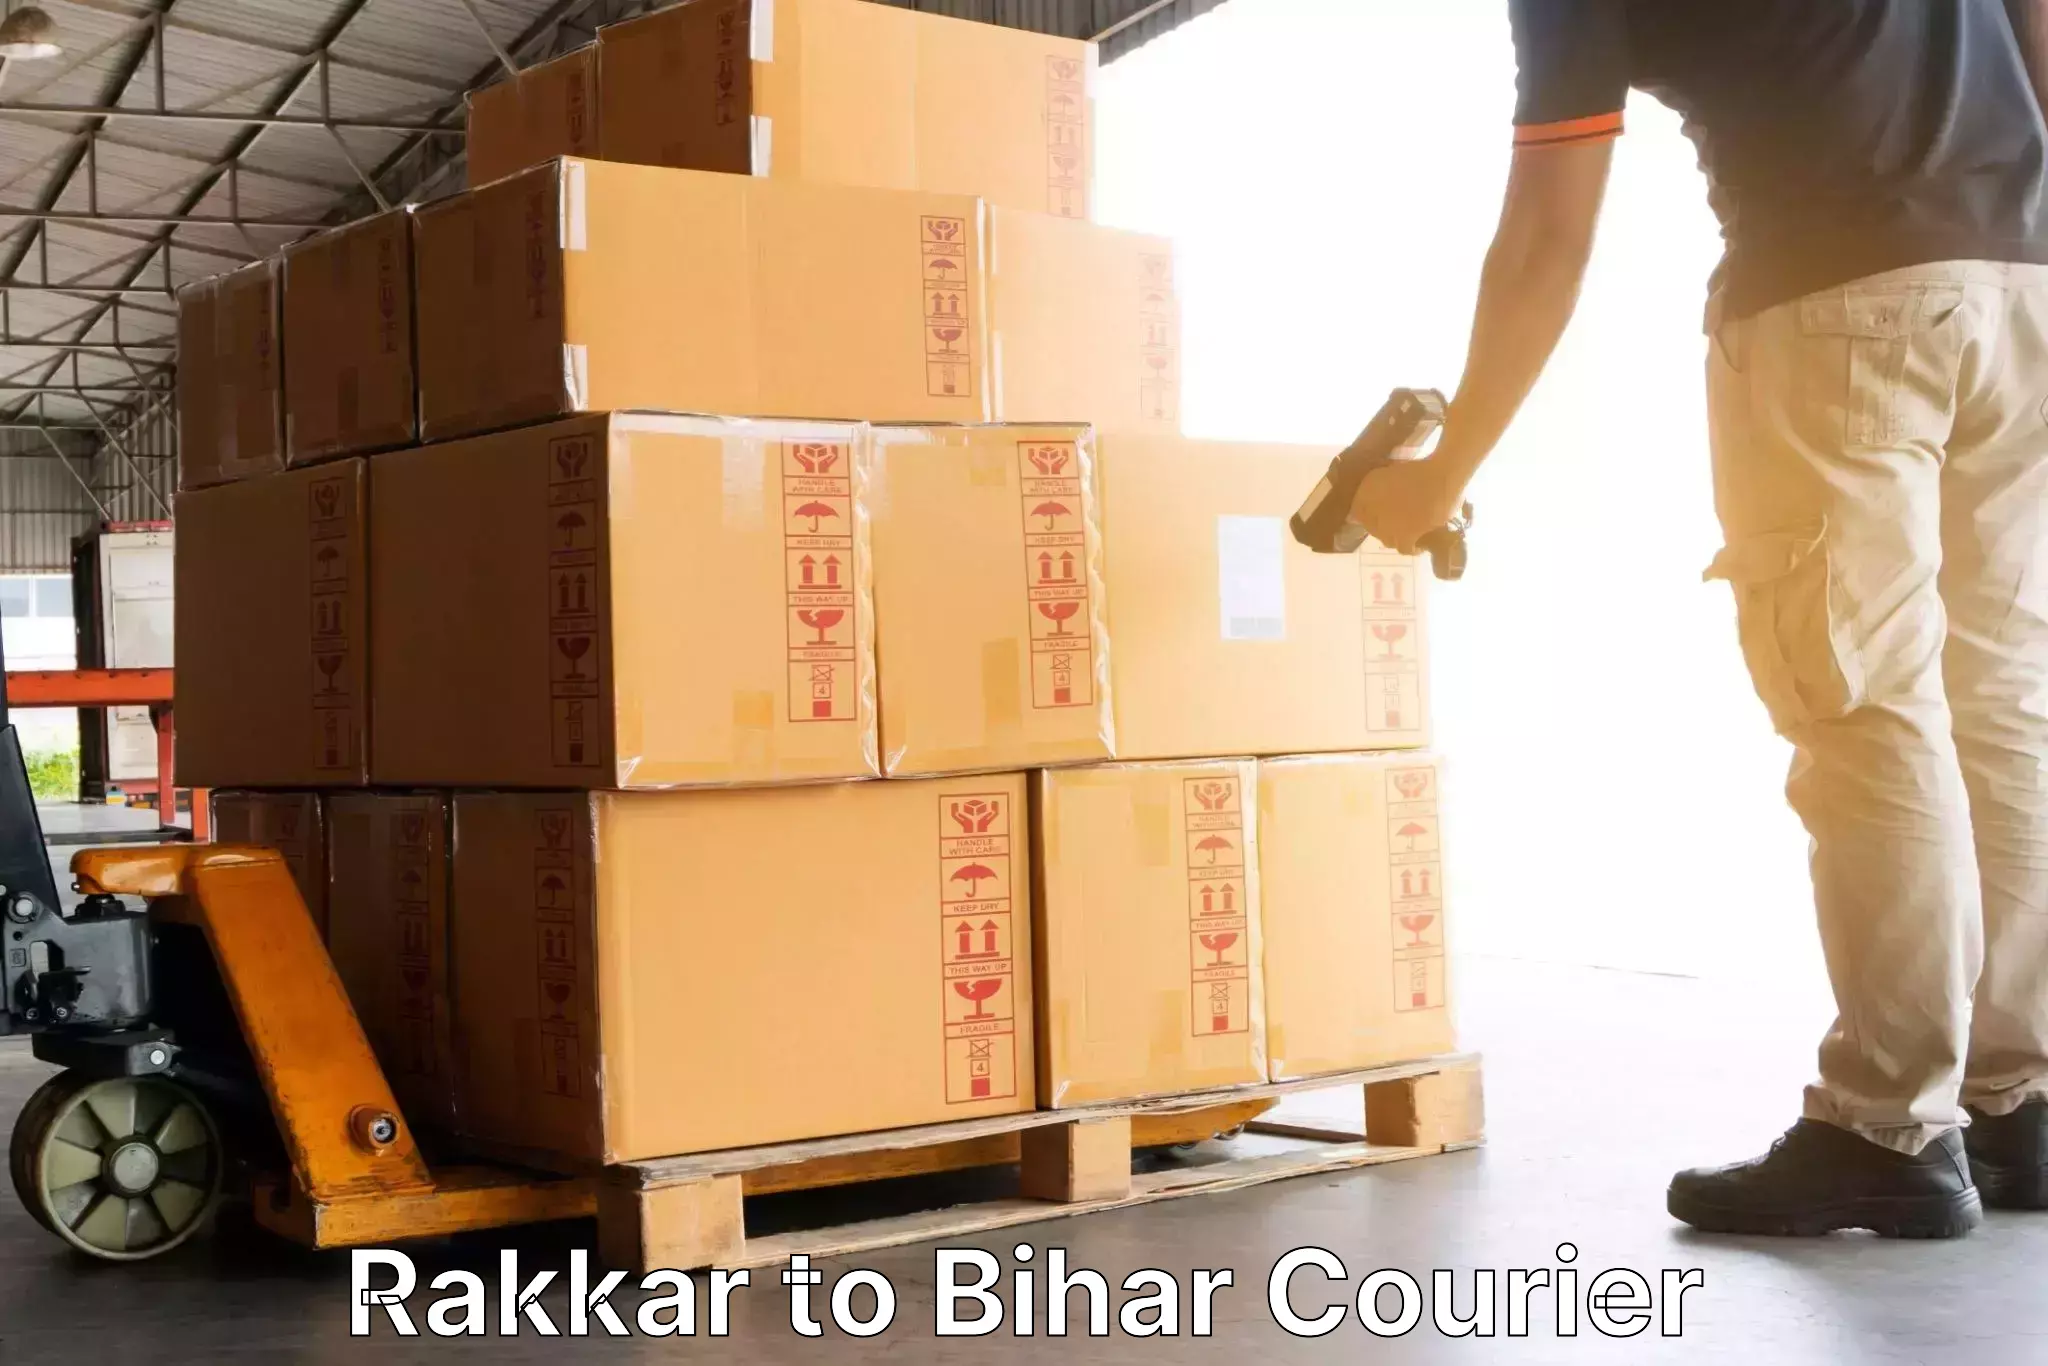 Doorstep delivery service Rakkar to Dhaka